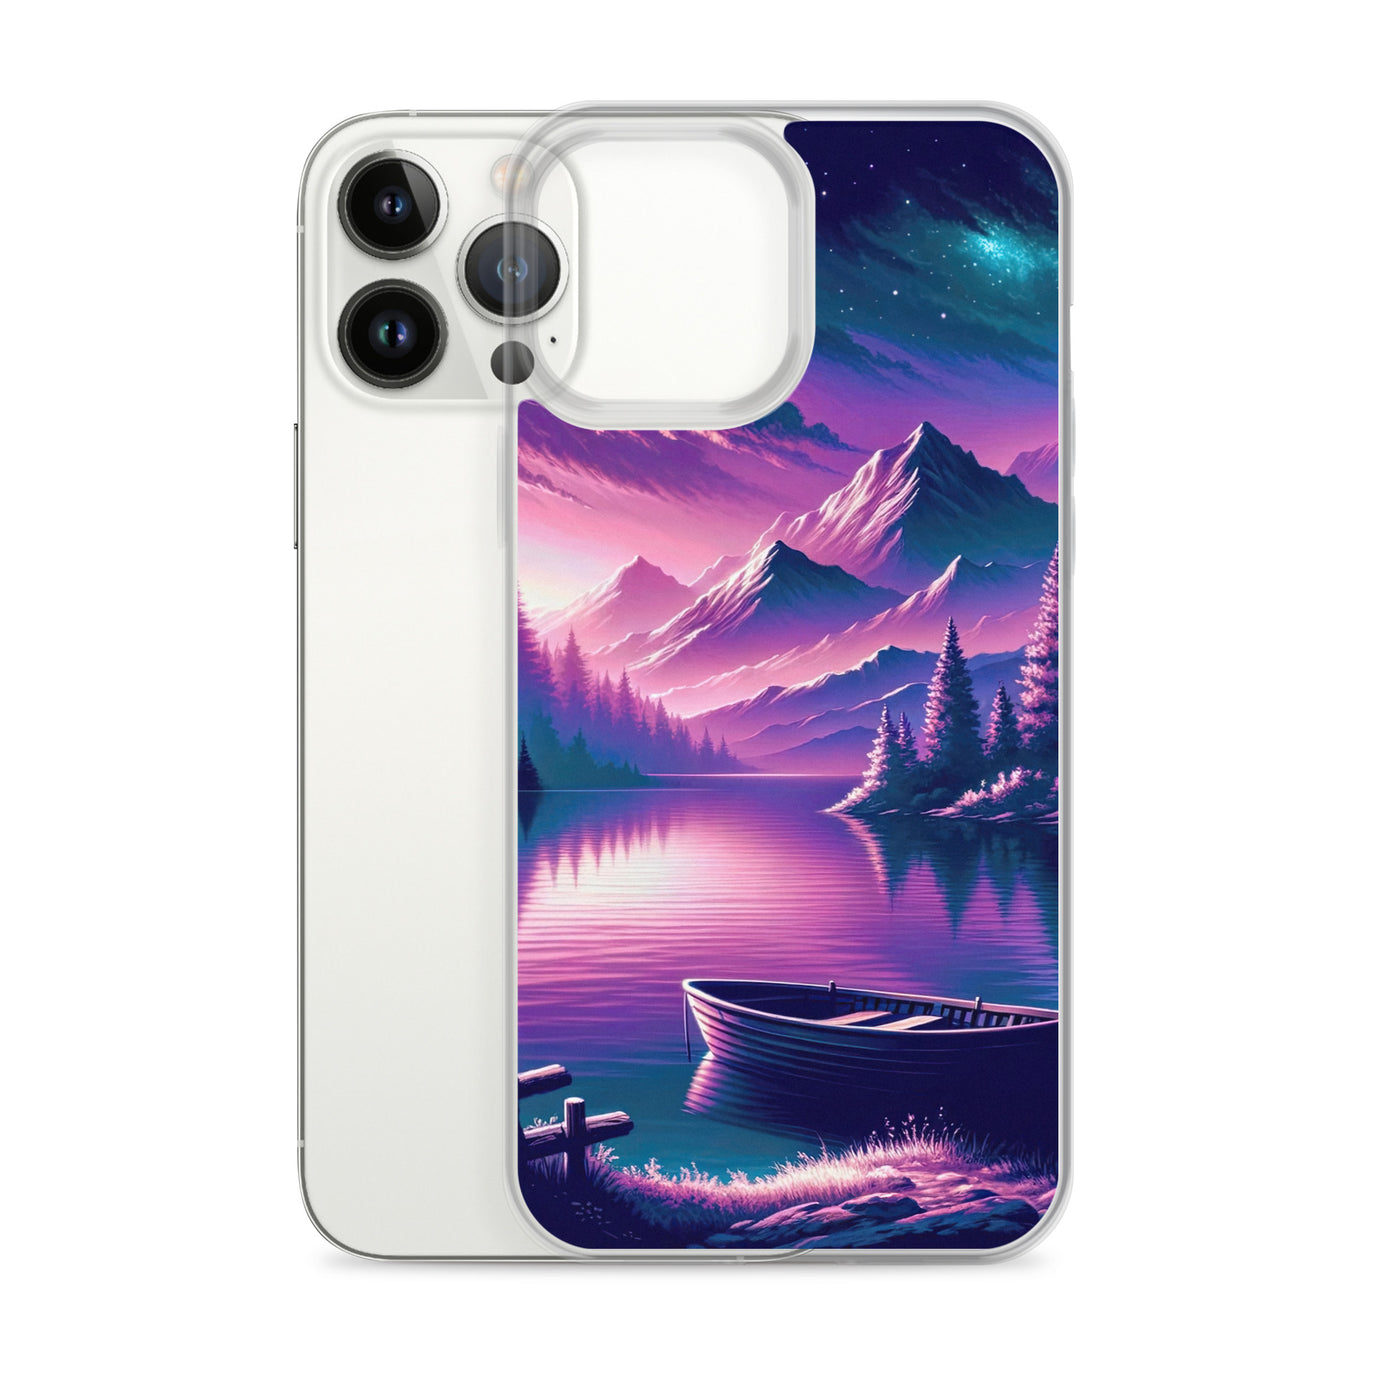 Magische Alpen-Dämmerung, rosa-lila Himmel und Bergsee mit Boot - iPhone Schutzhülle (durchsichtig) berge xxx yyy zzz